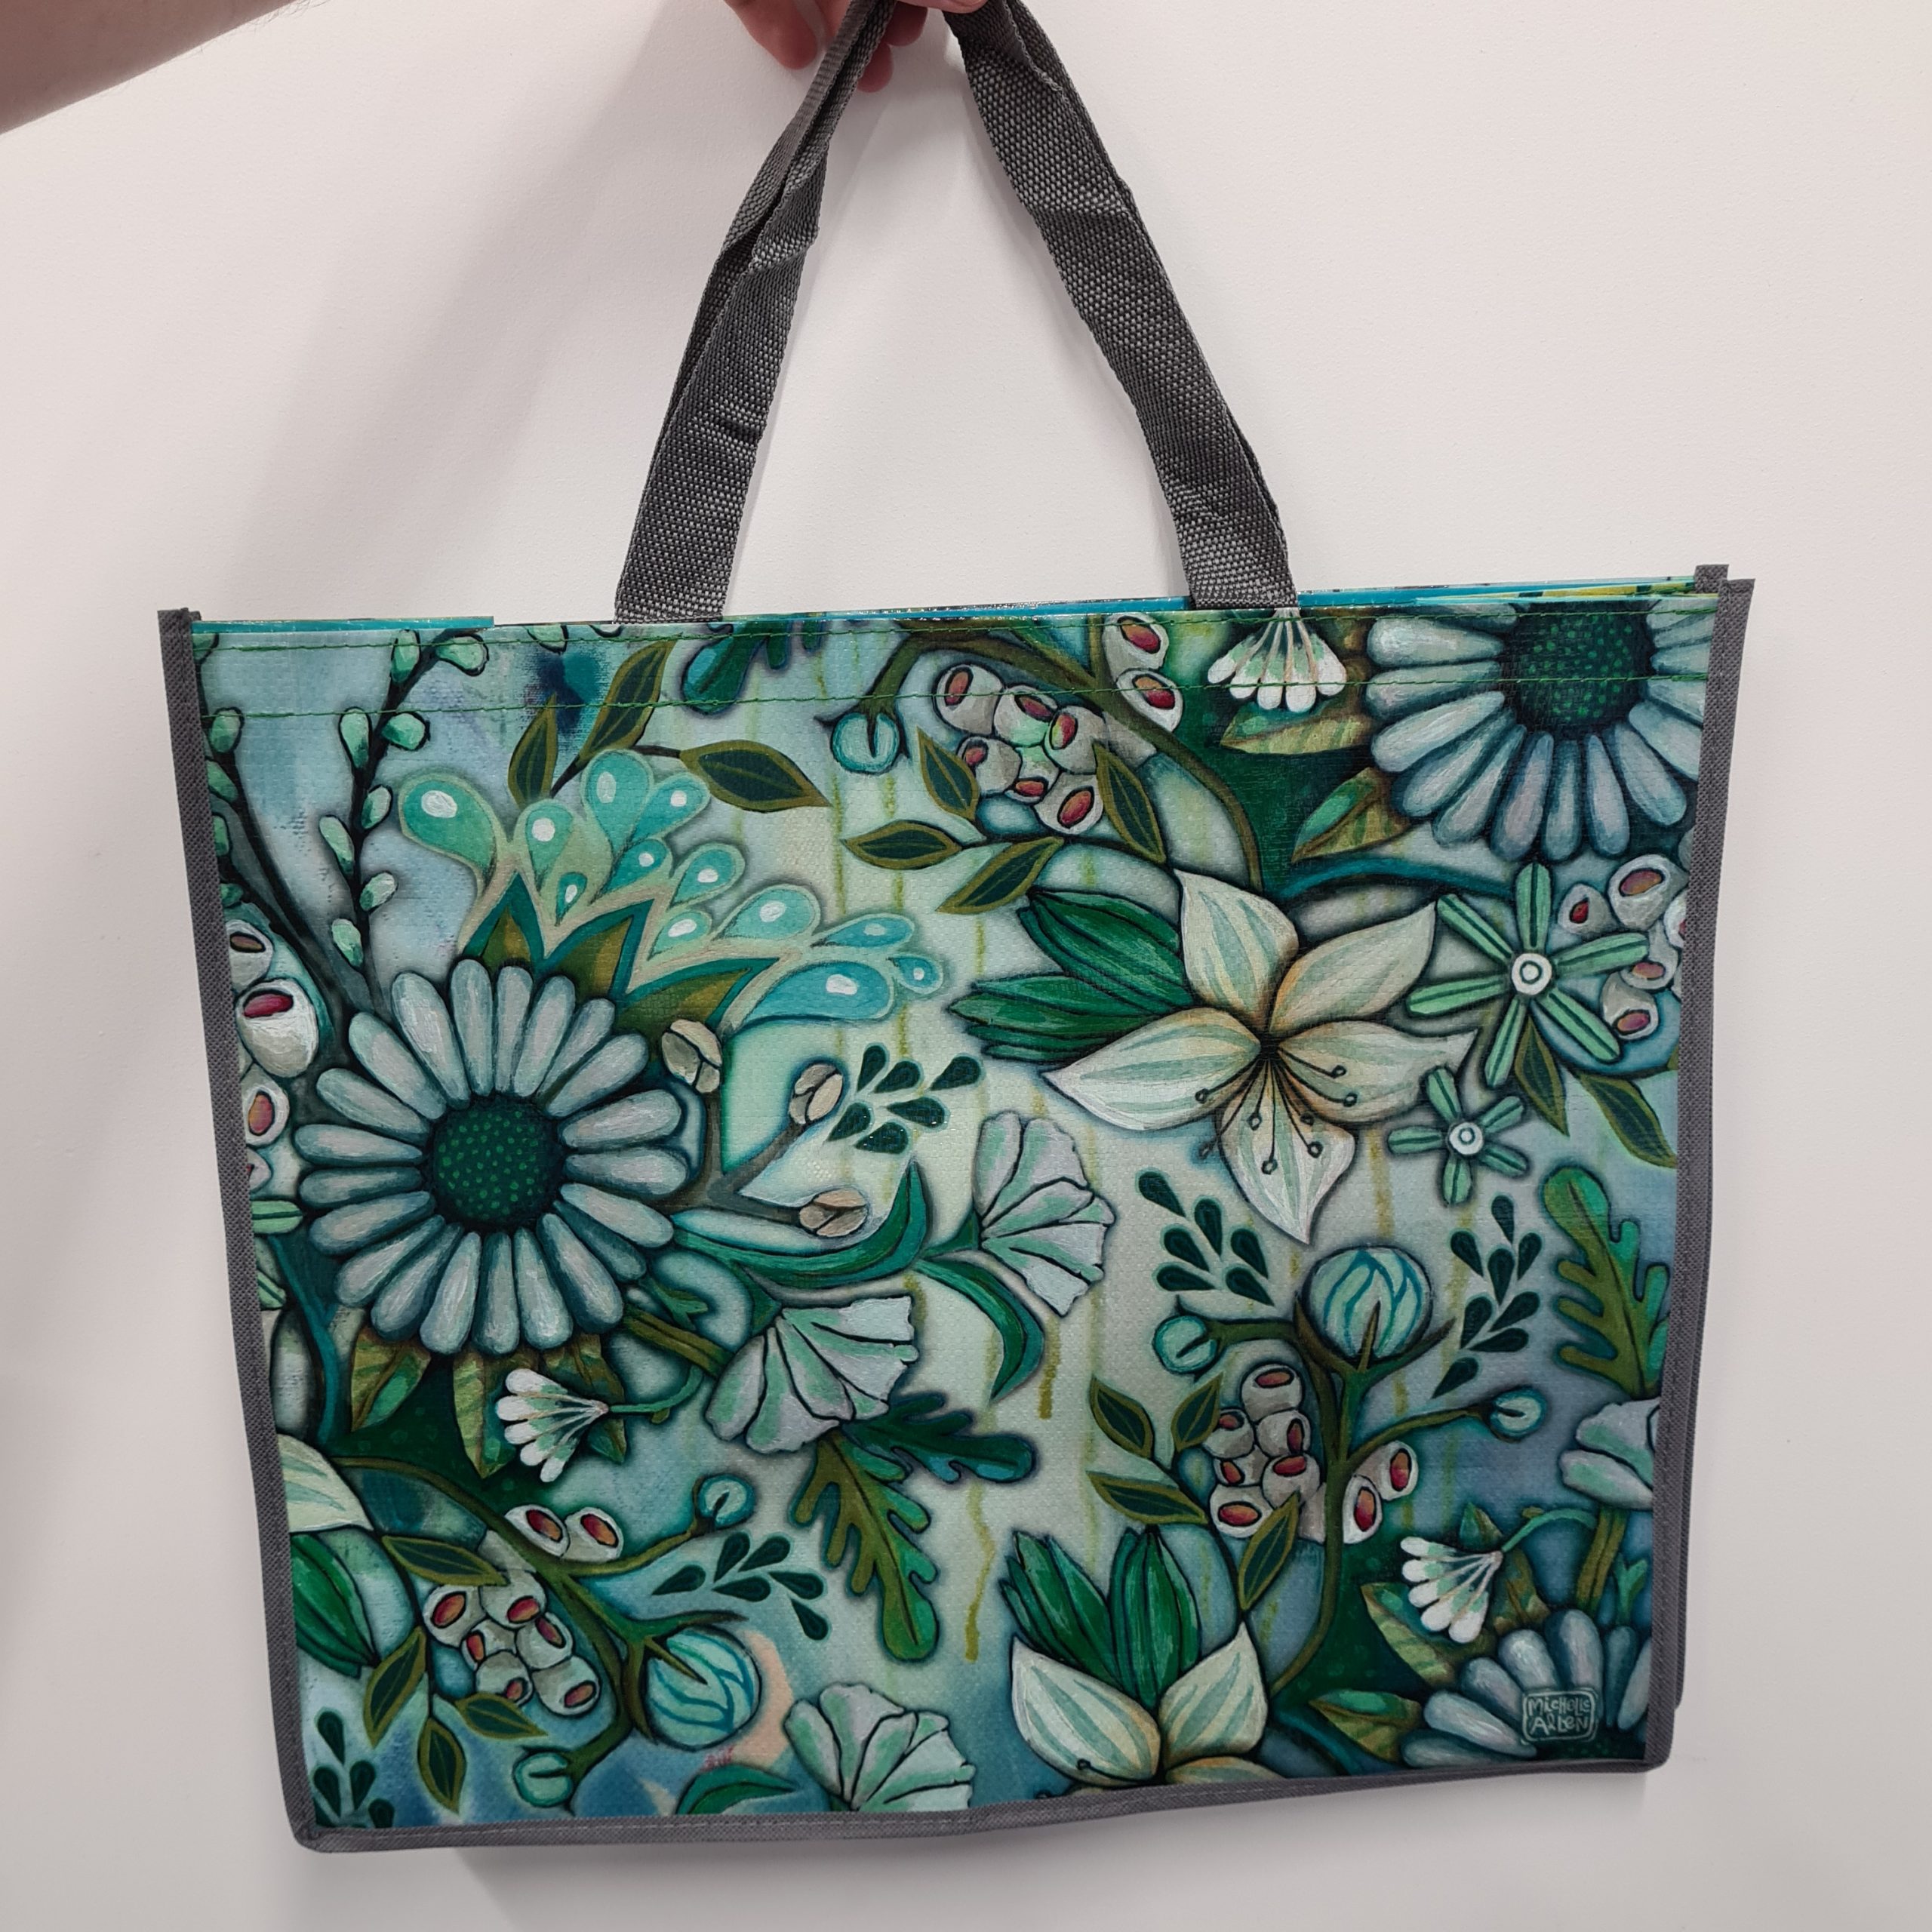 MICHELLE ALLEN Designs TOTE BAG Grocery Shopper Picnic Beach GREEN FLOWER FLORAL